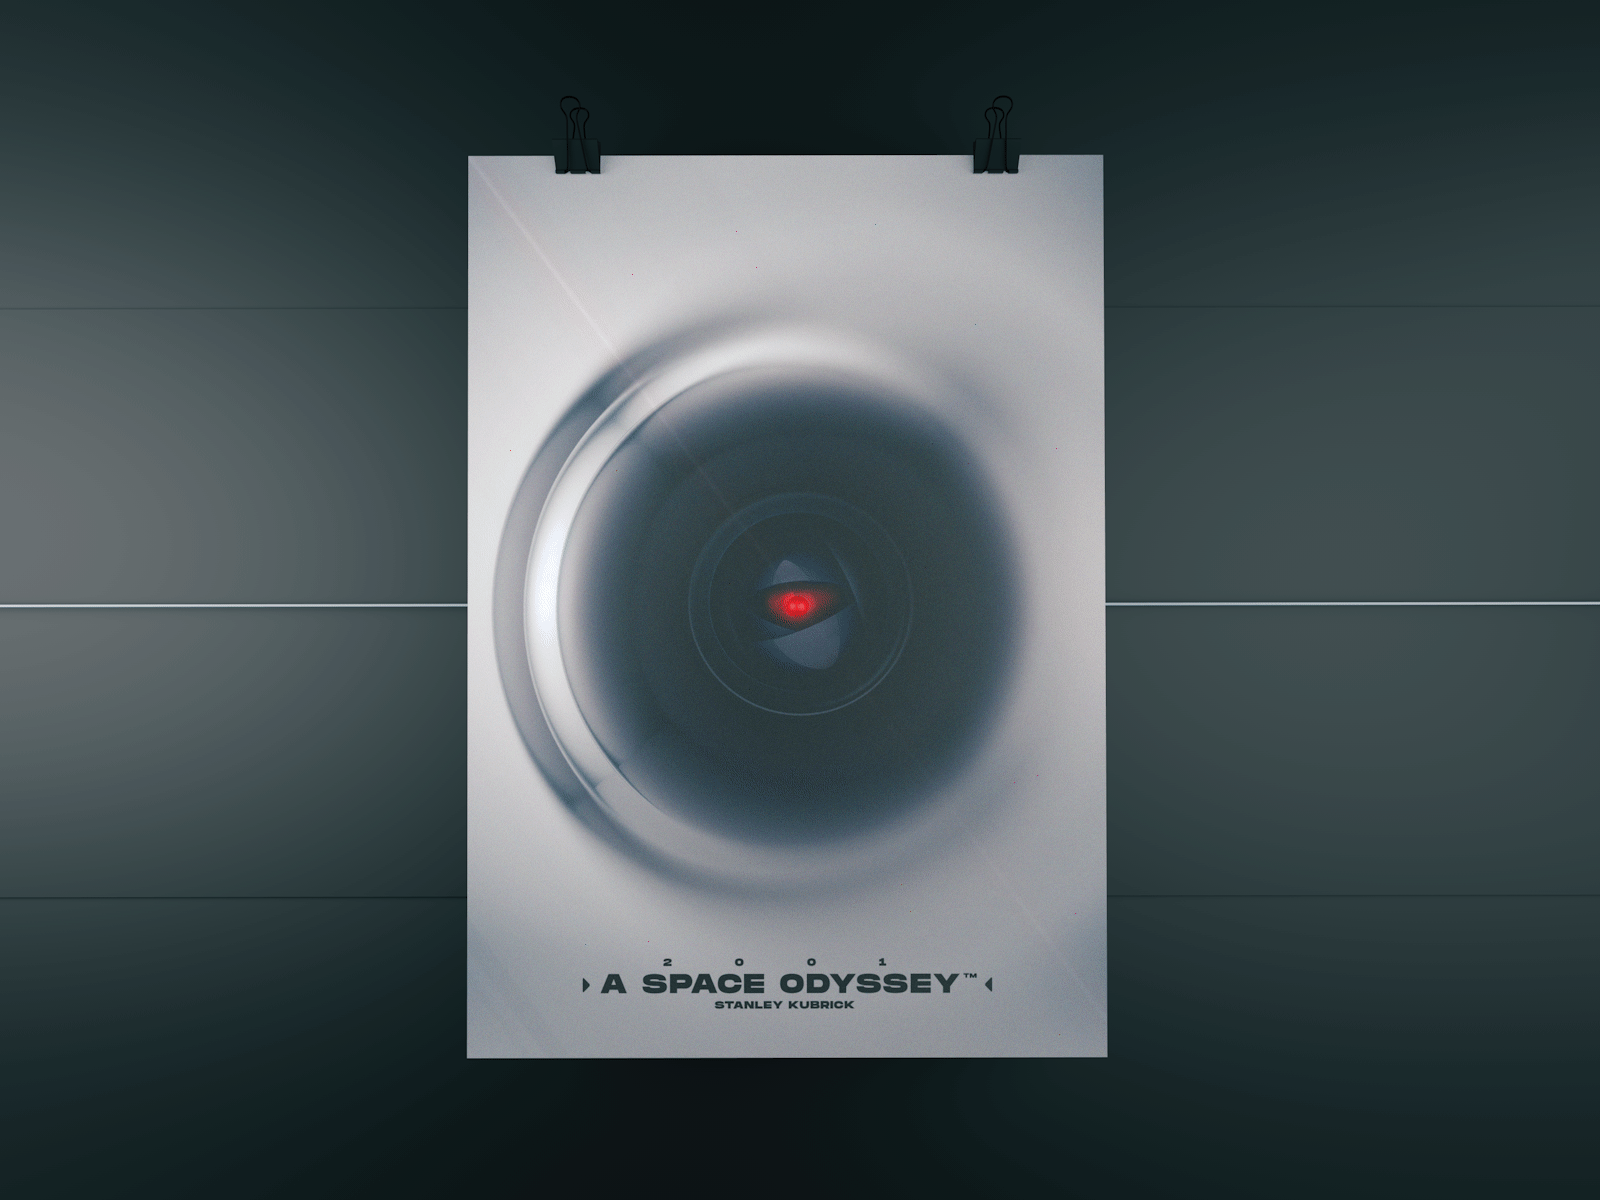 Stanley Kubrick - 2001: a space odyssey ™